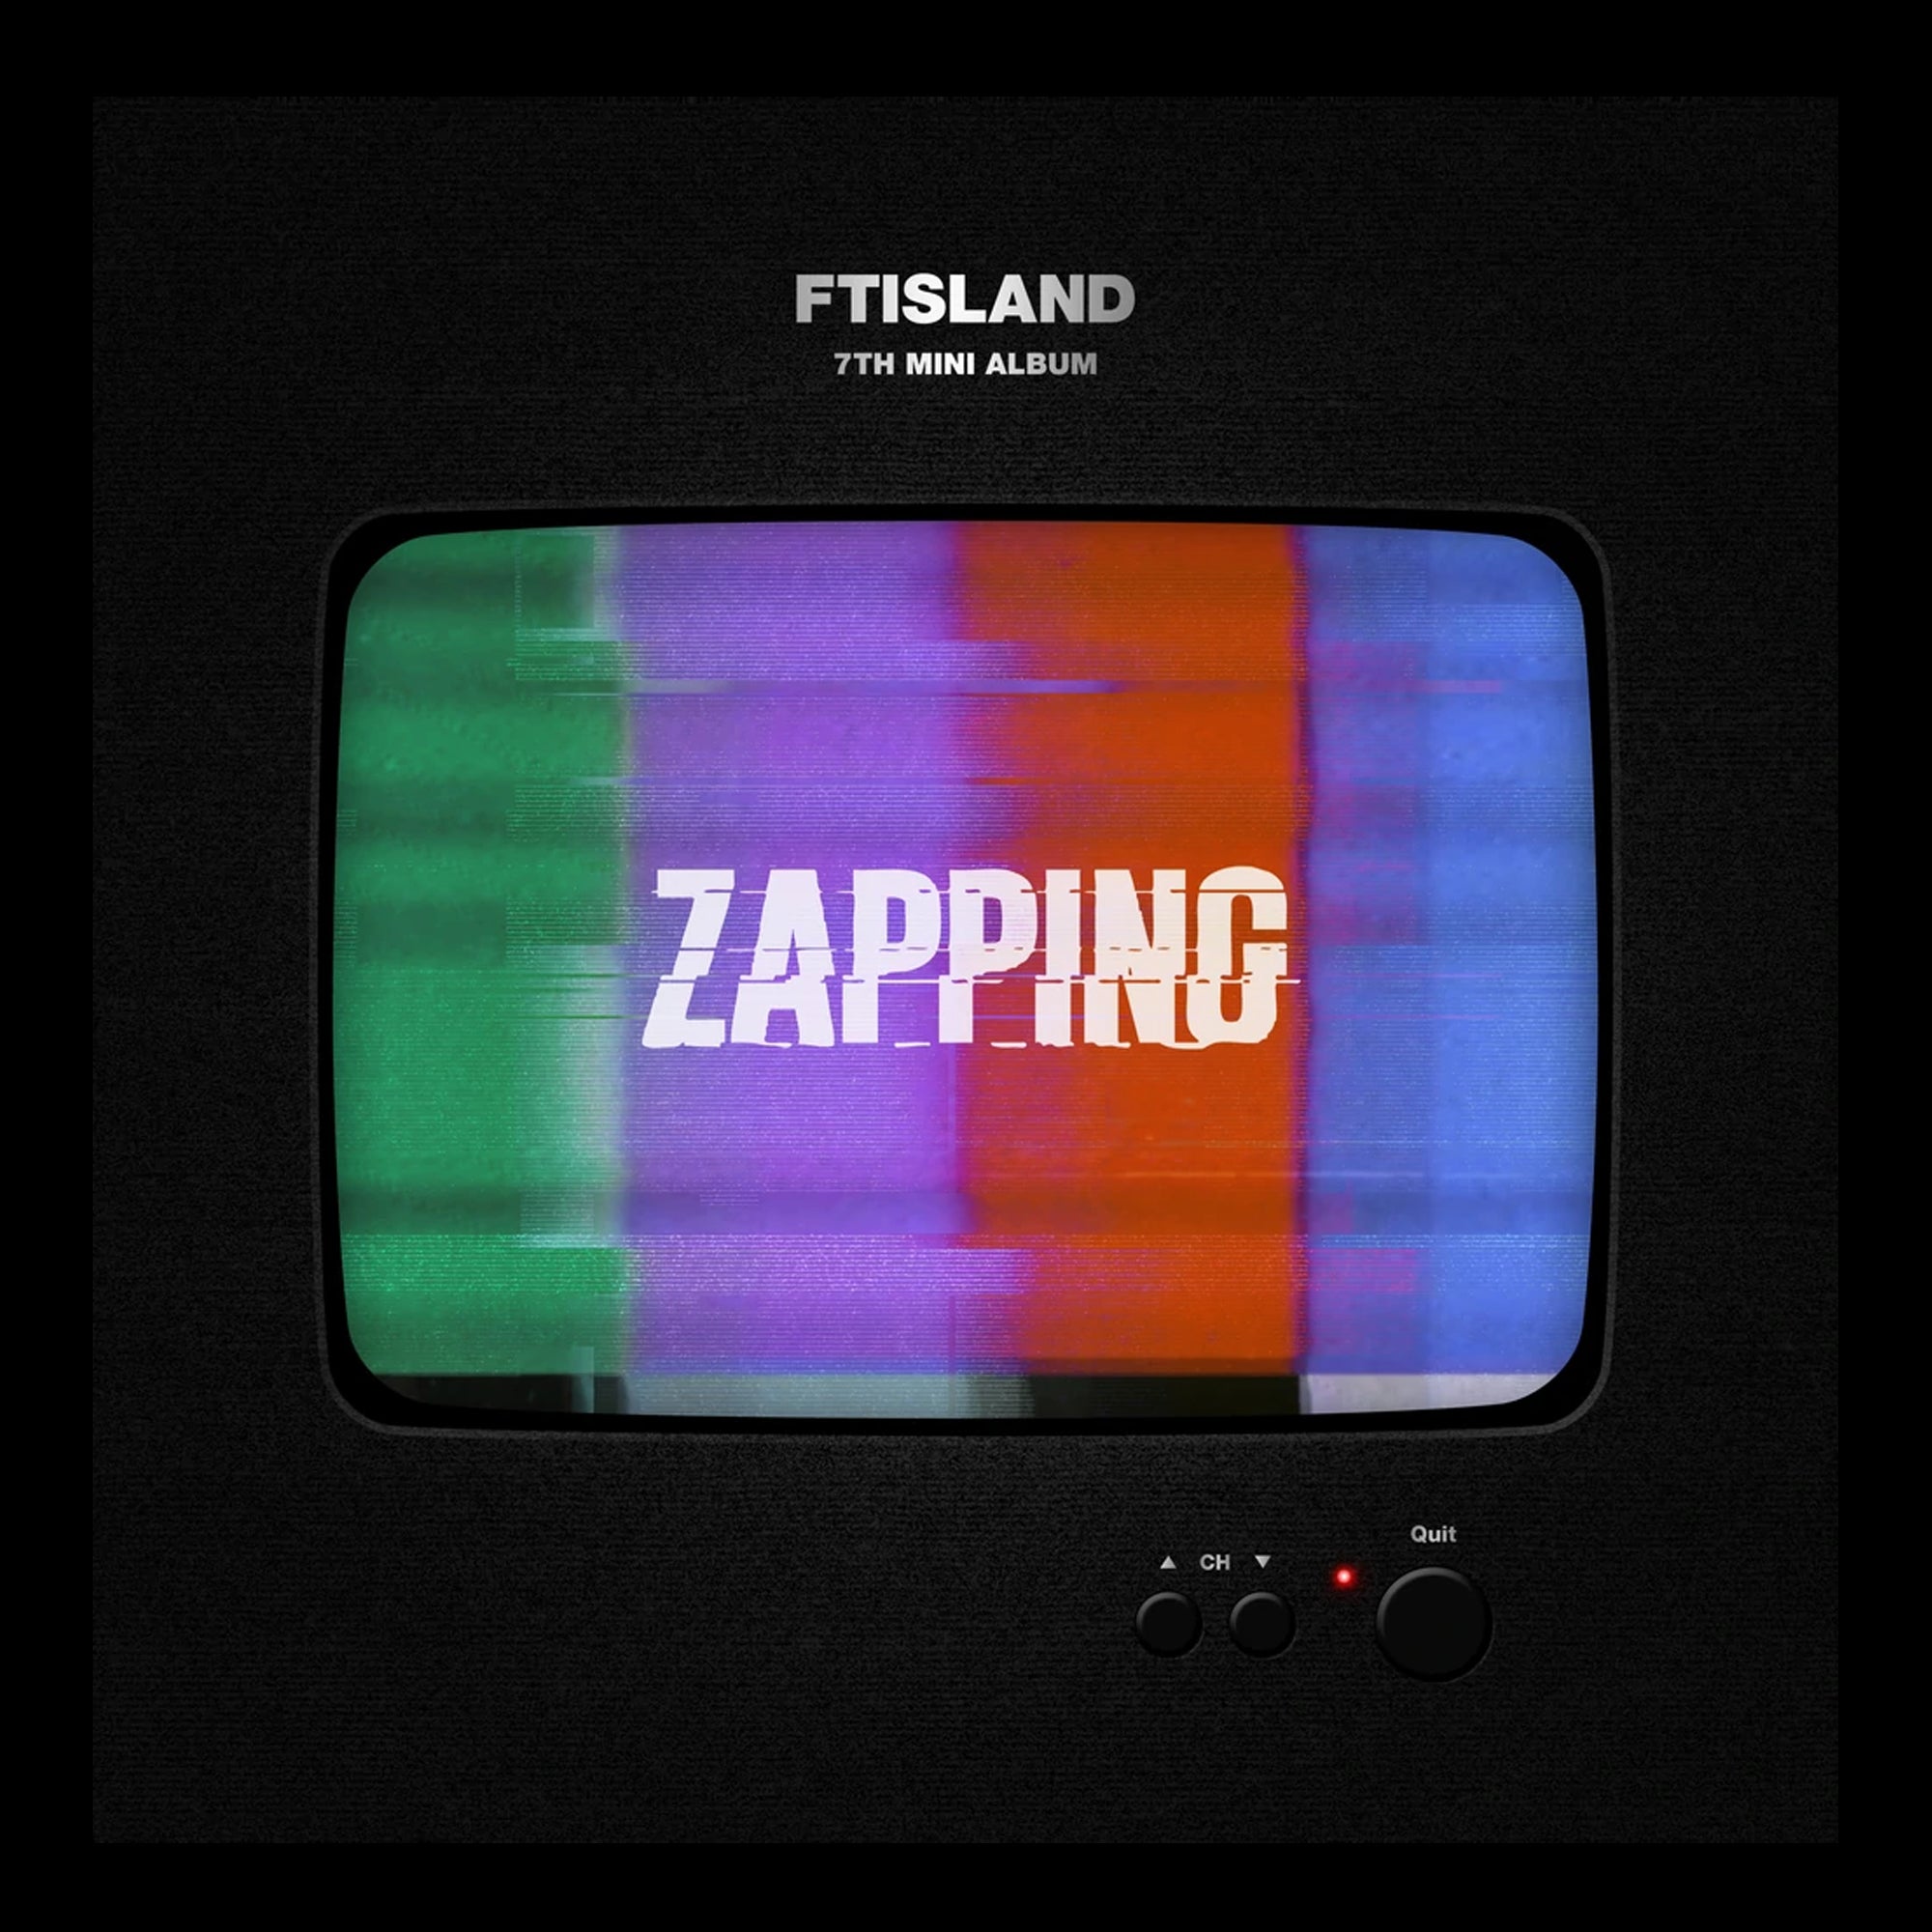 FTISLAND - Zapping